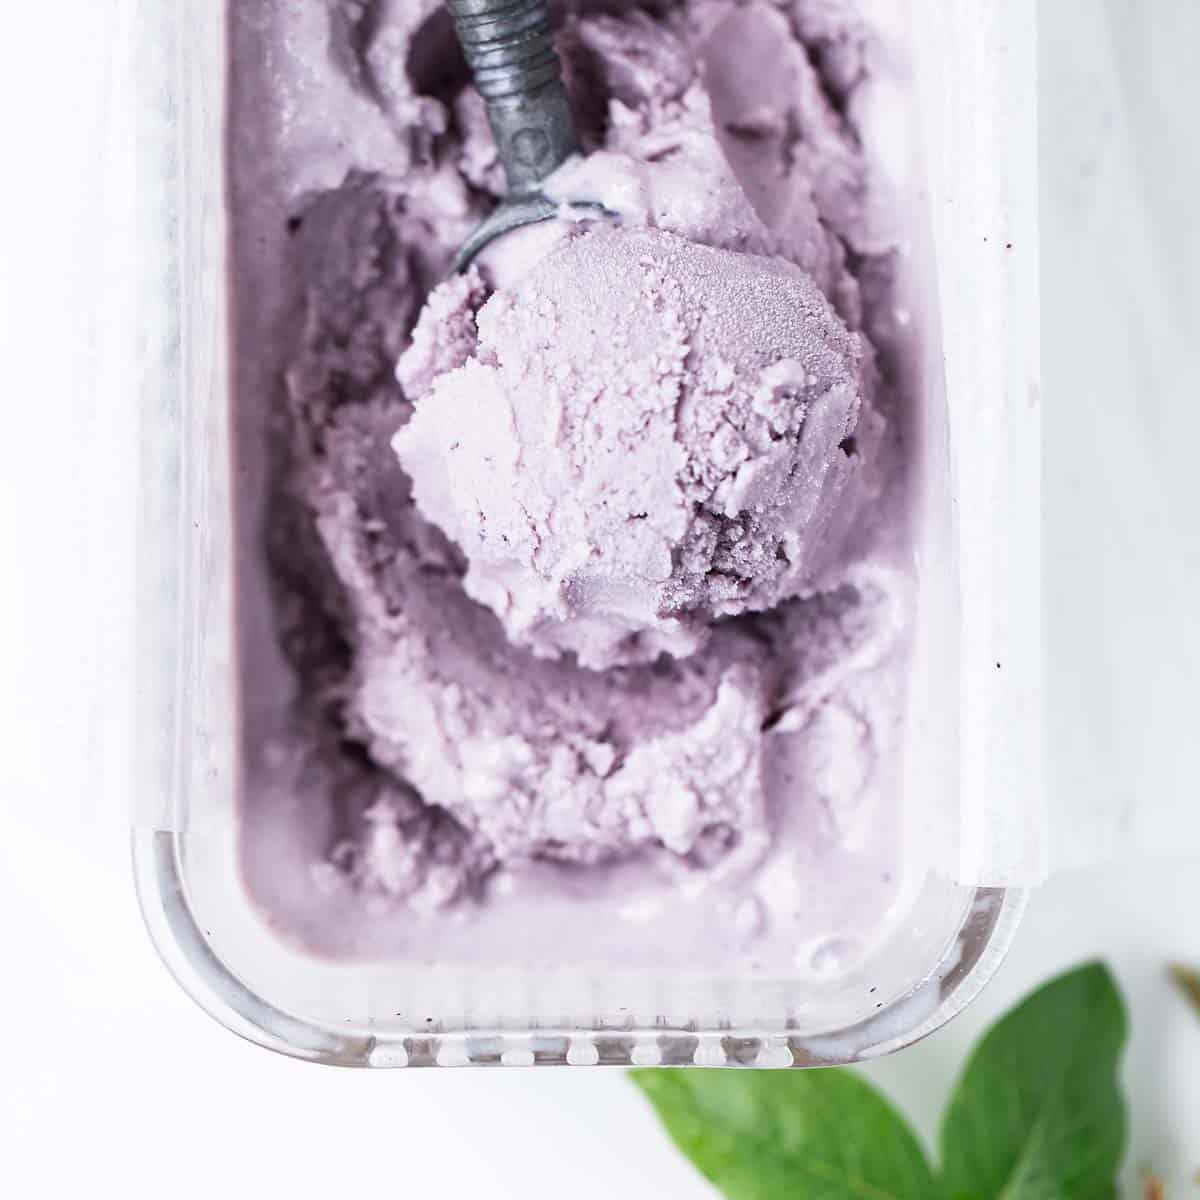 Scoop of blueberry gelato in vintage glass dish.